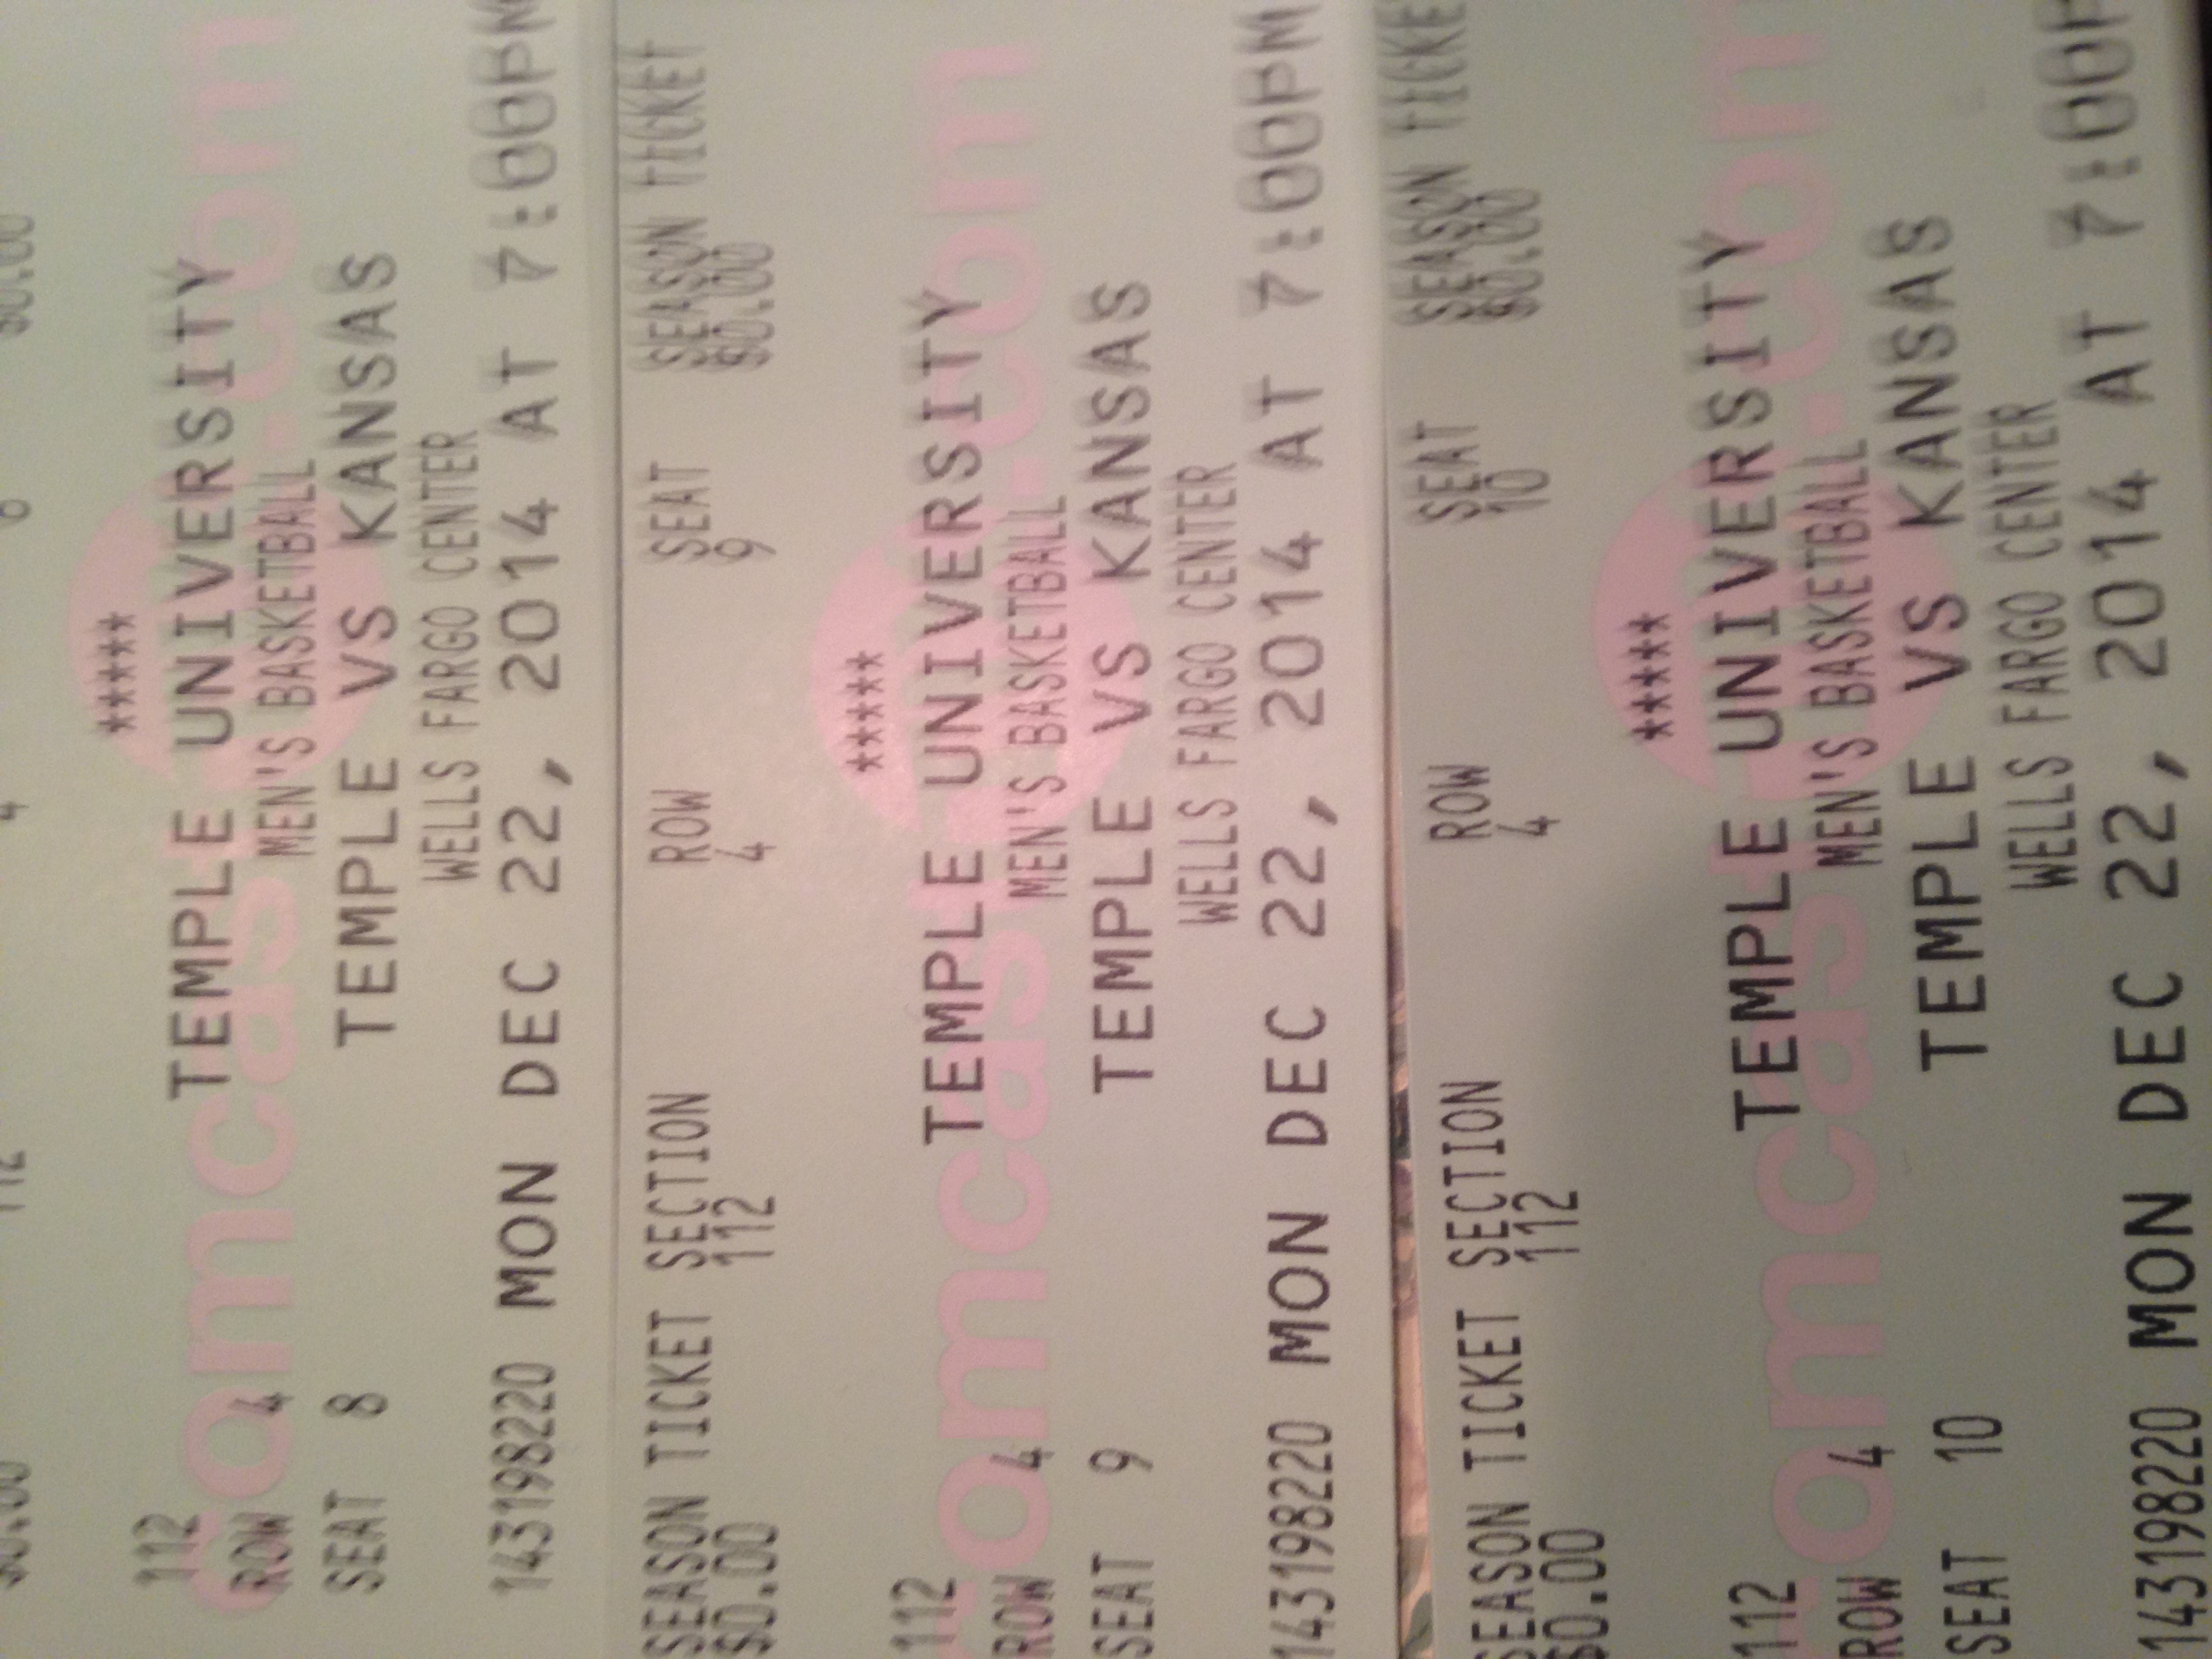 Paul Benn's tickets he sold me!